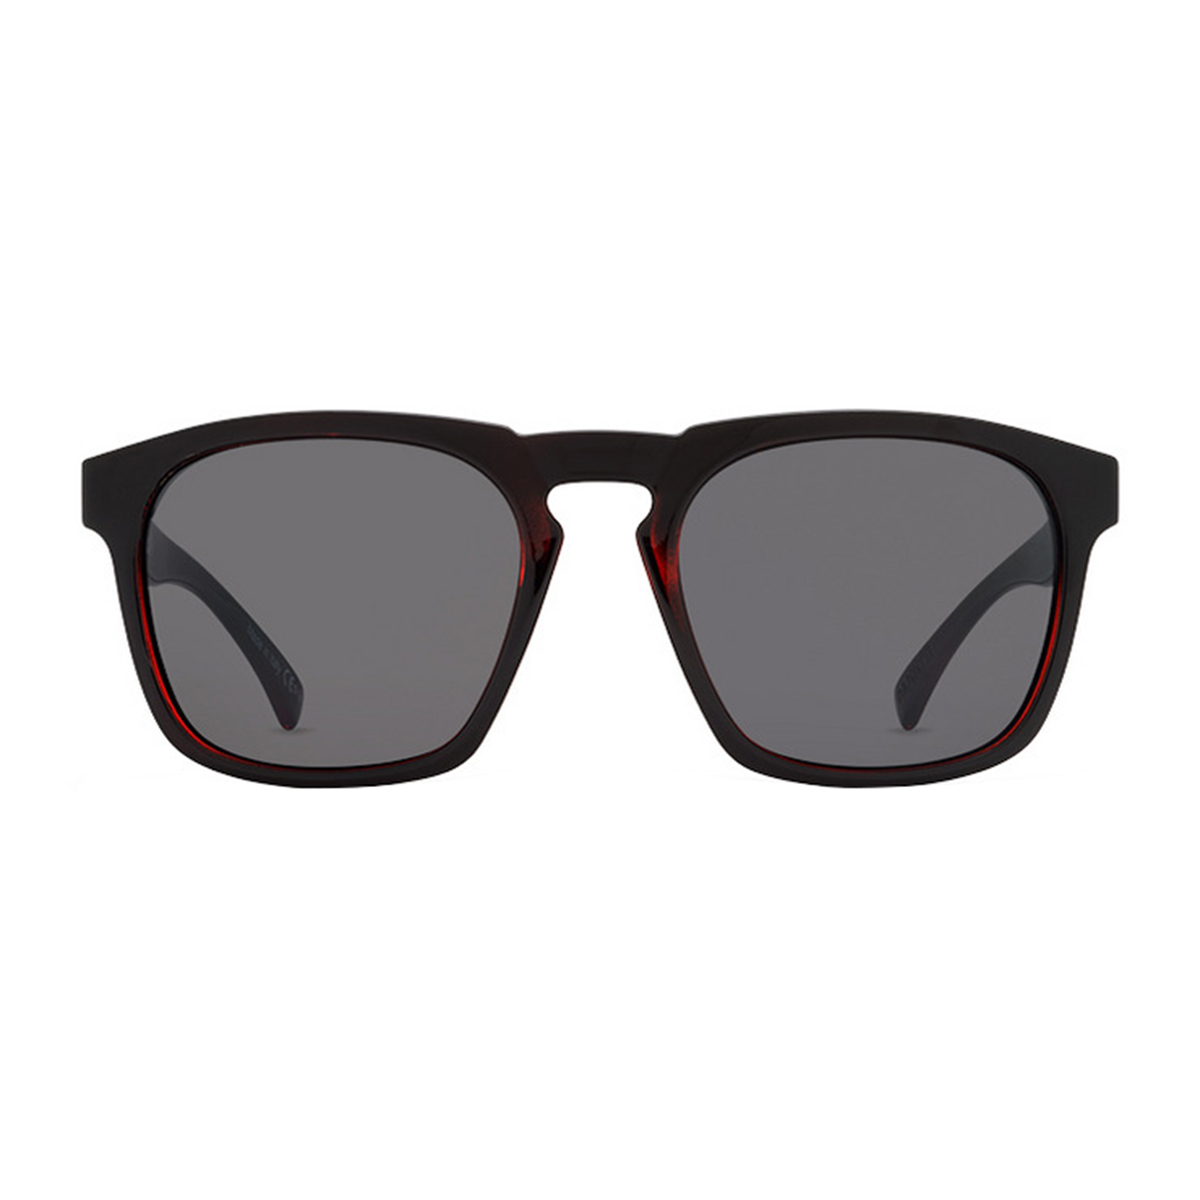 VonZipper Women's Banner Sunglasses,OS,Black - image 1 of 1